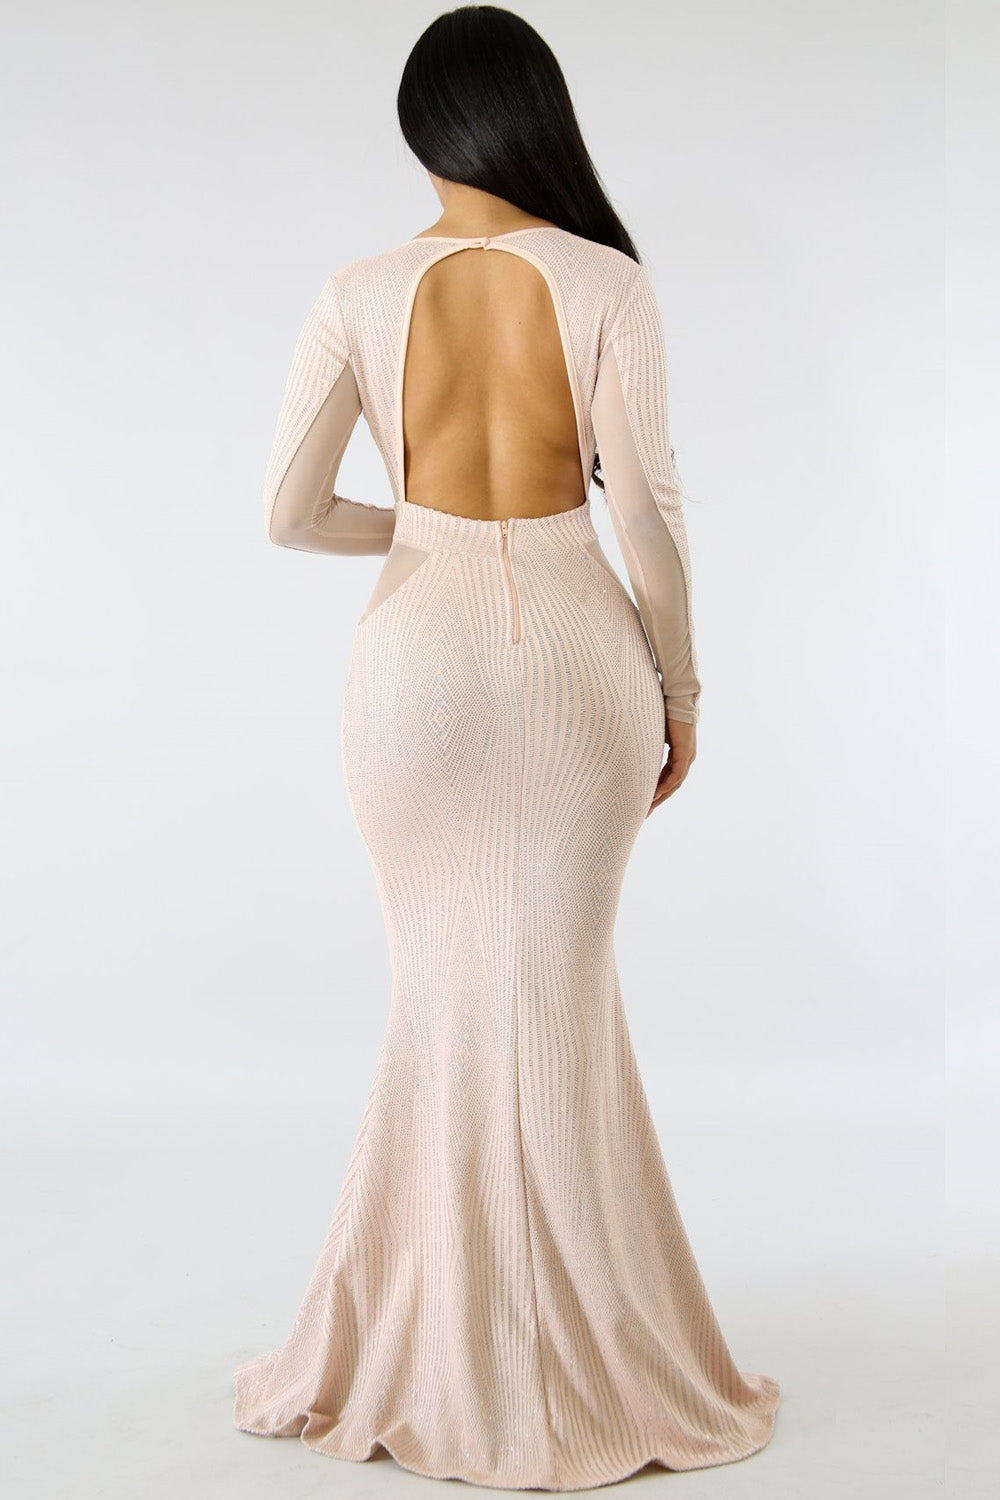 goPals full length beige long sleeve mermaid dress with deep vee neckline and open back. 